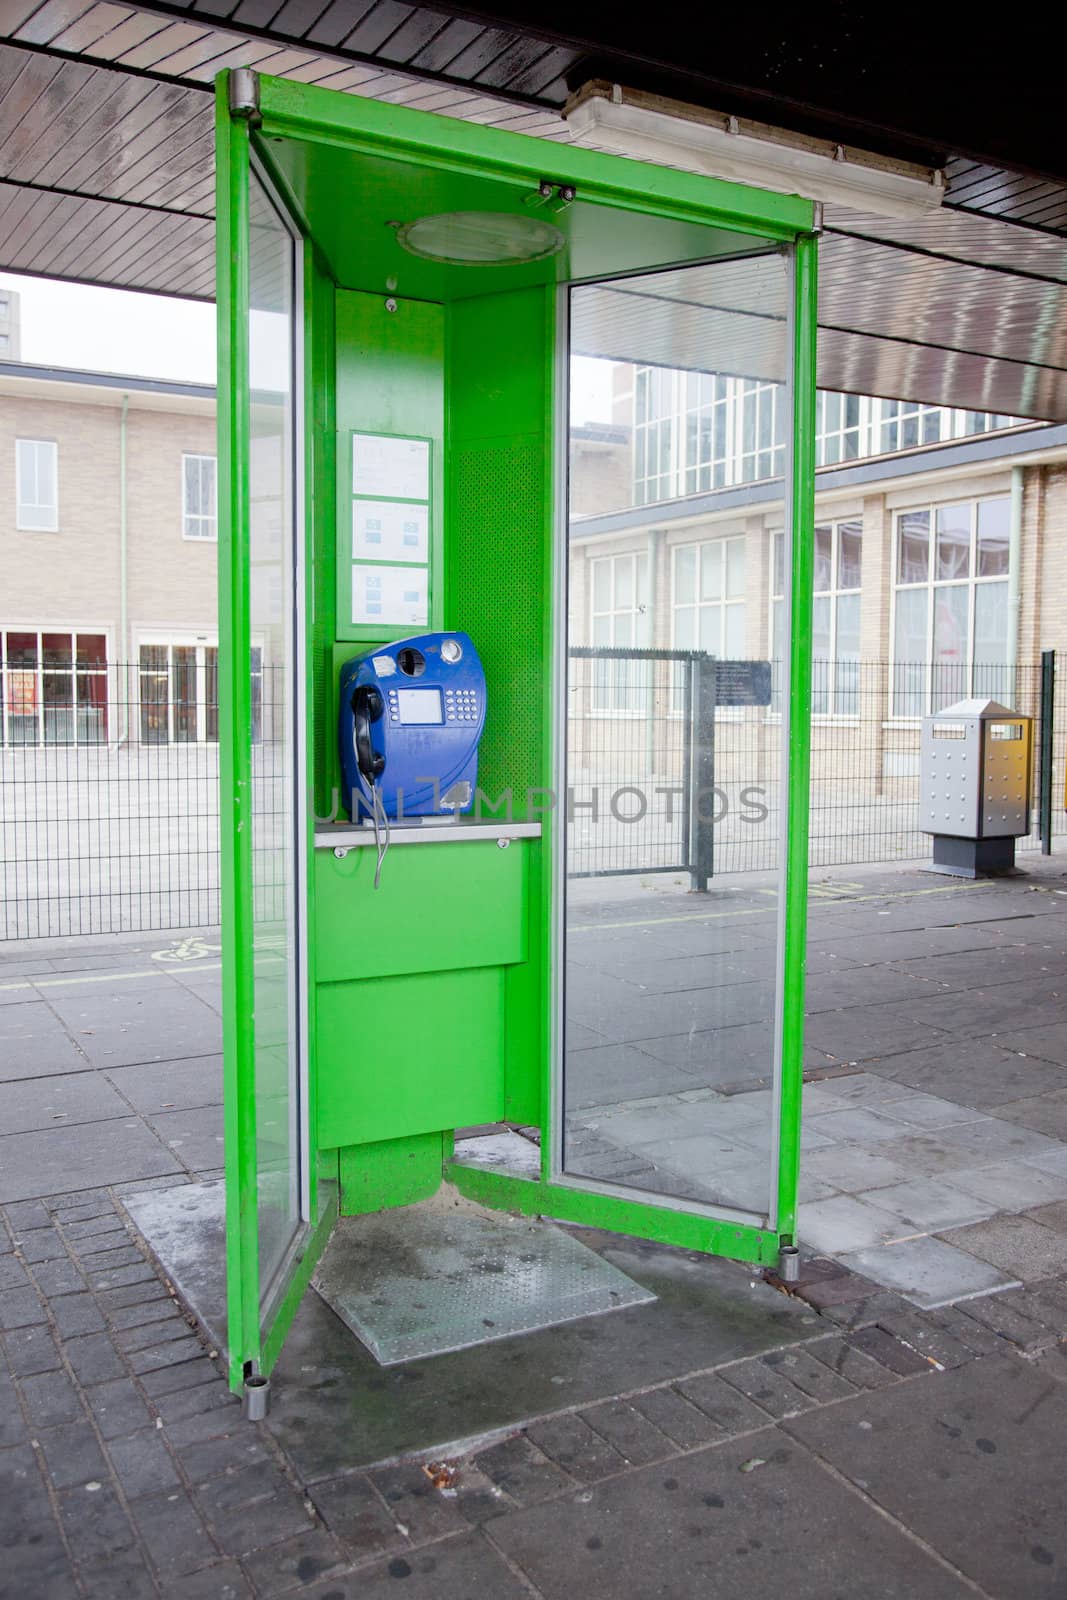 pay phone near amstel station by ahavelaar